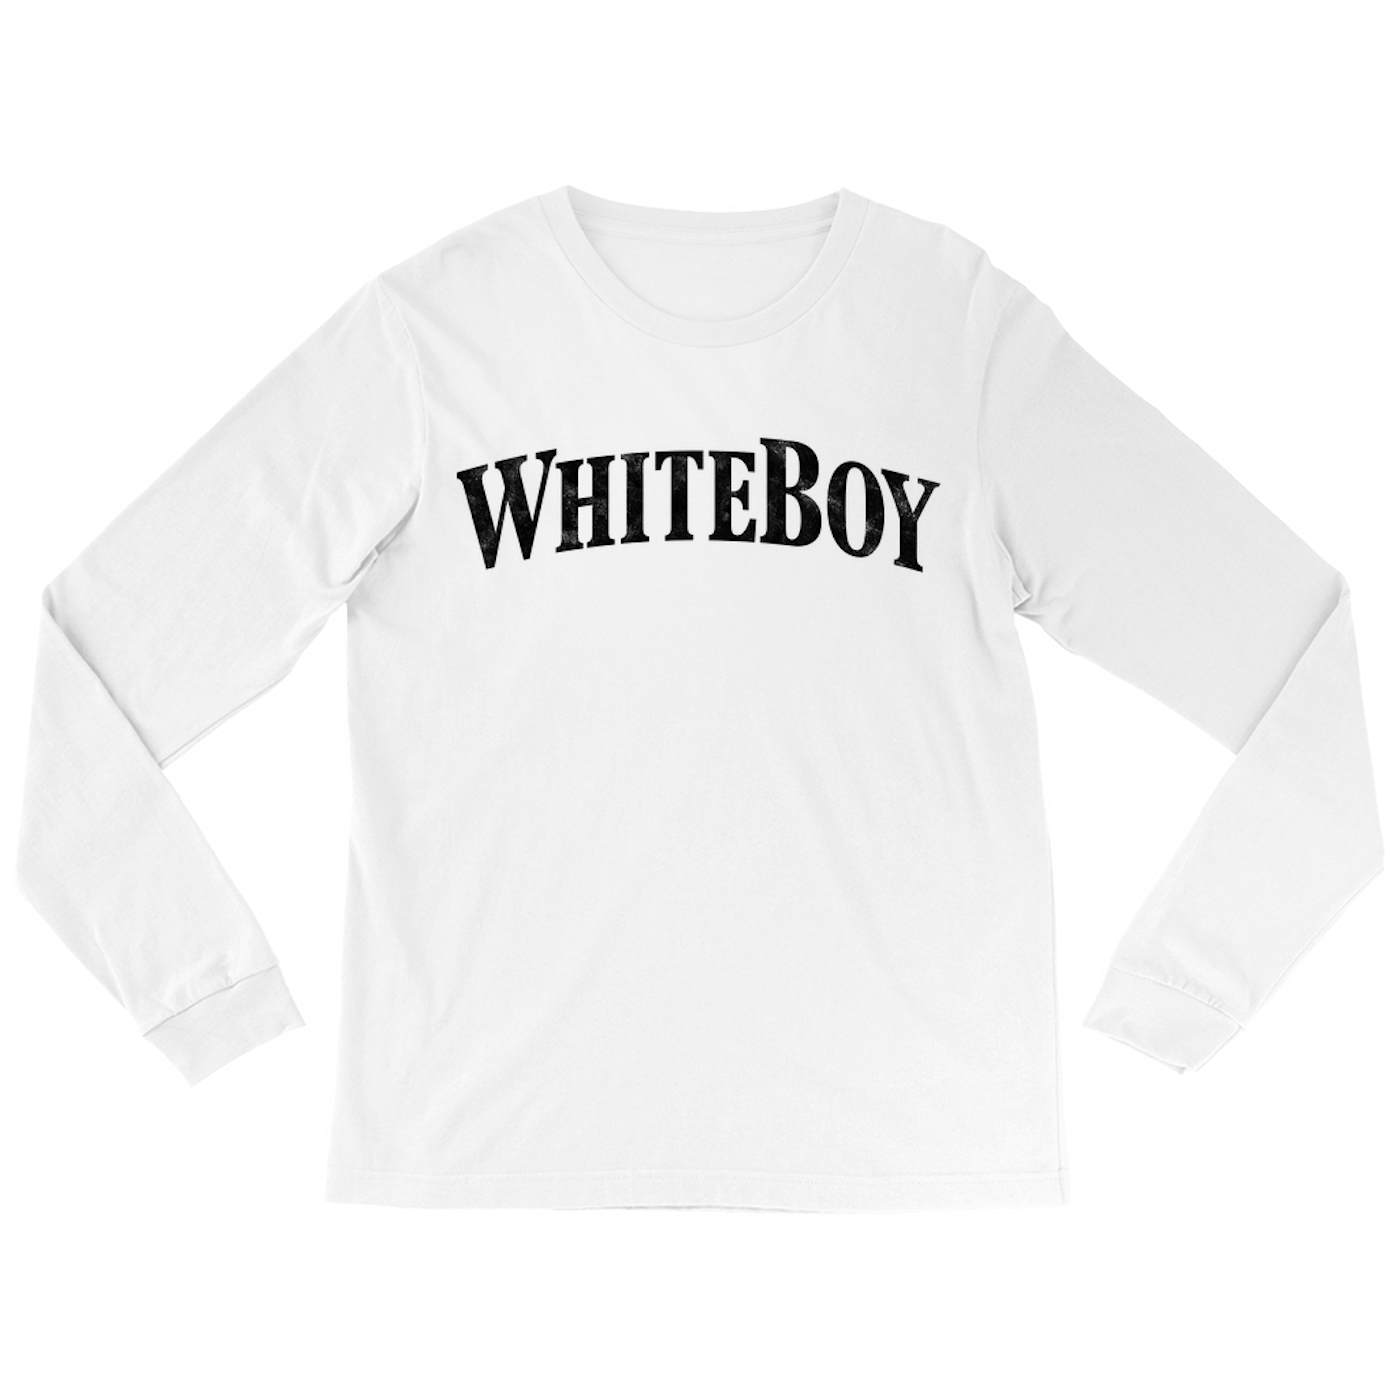 Mötley Crüe Long Sleeve Shirt | White Boy Worn By Tommy Lee Mötley Crüe Shirt